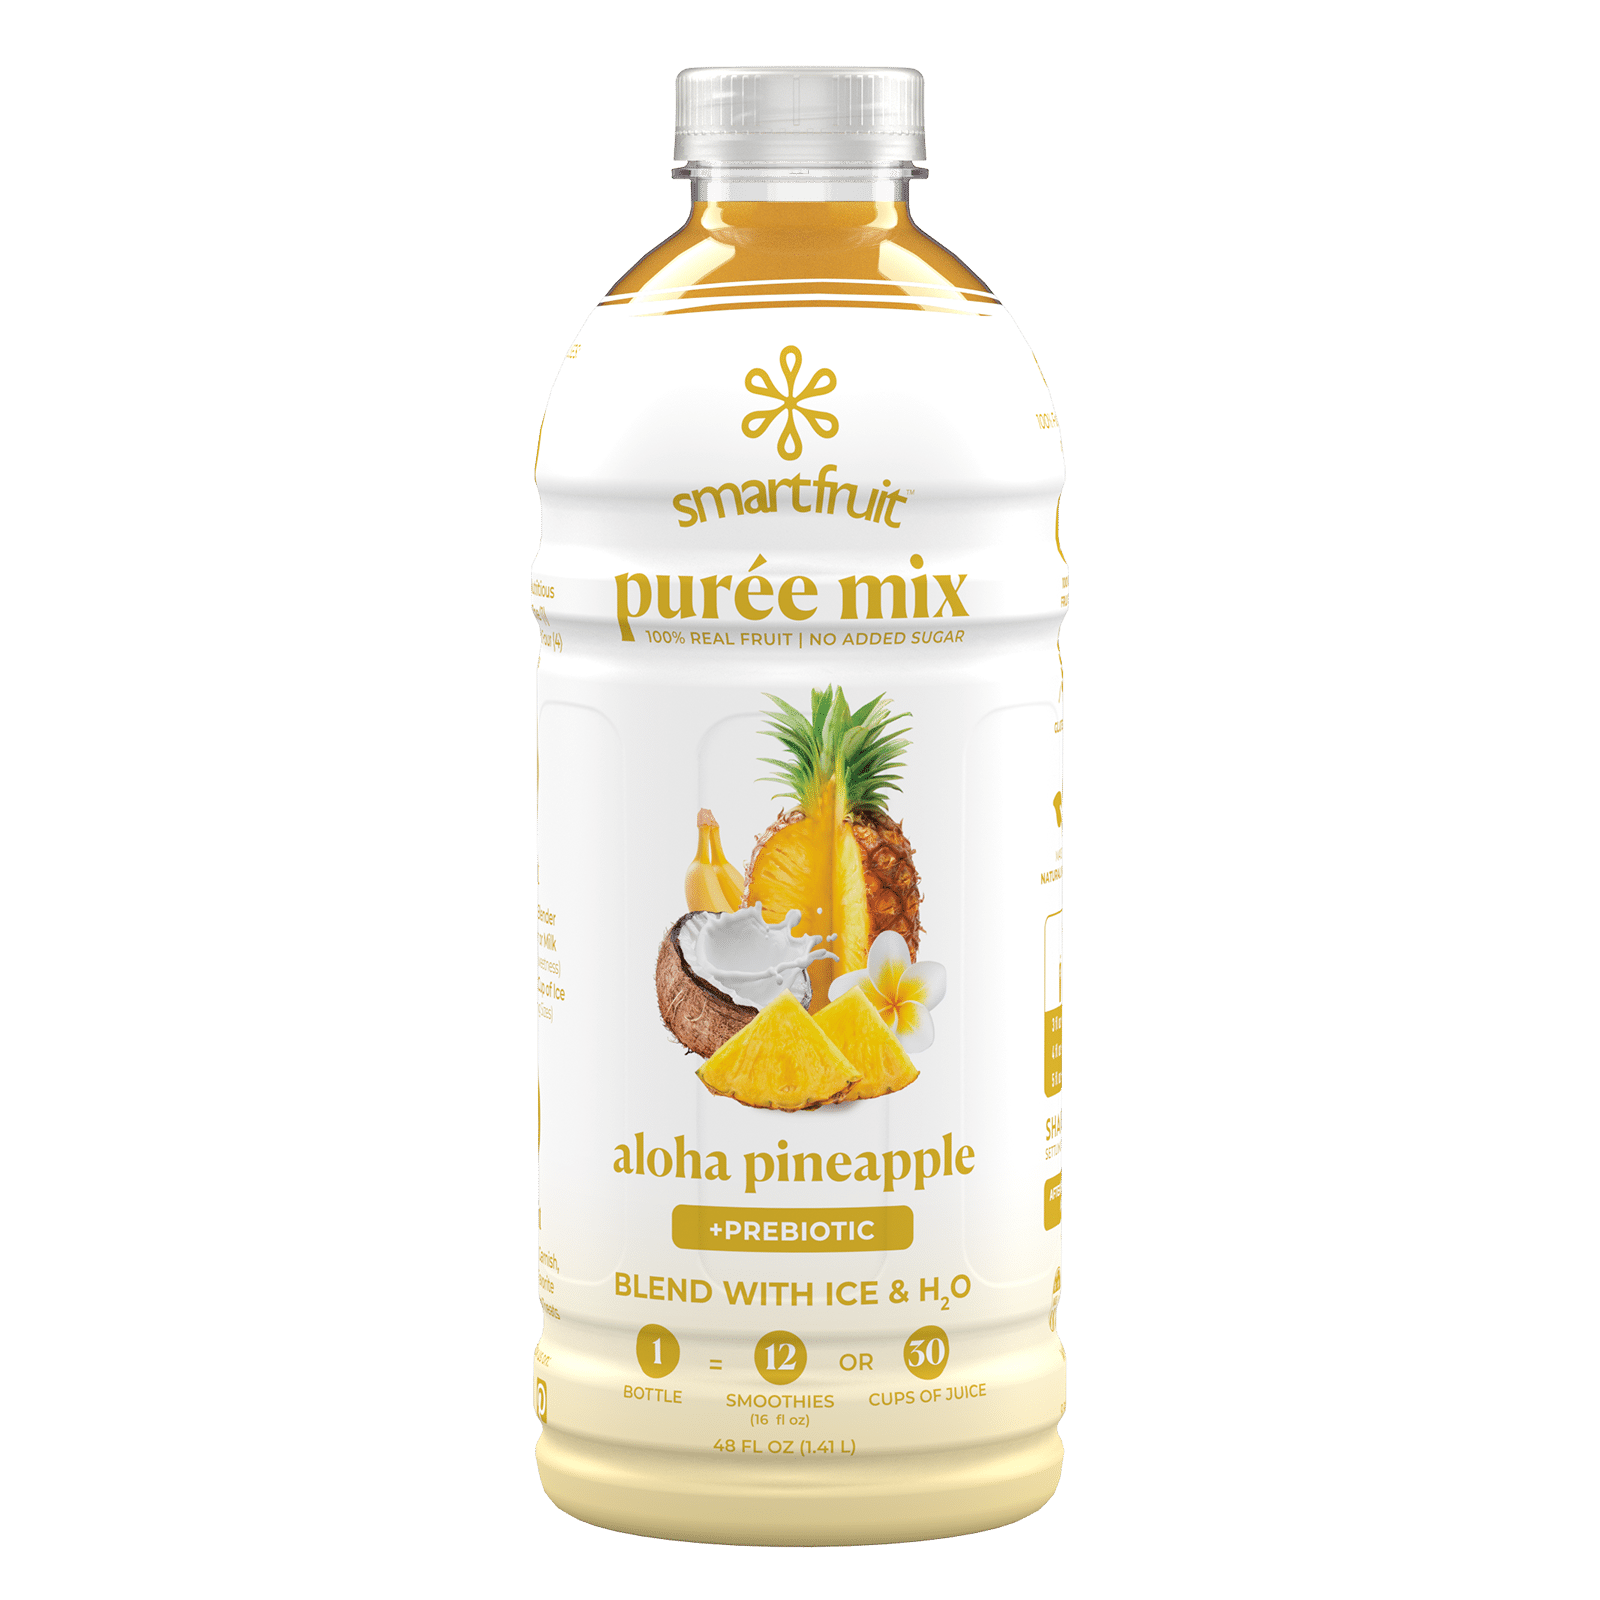 Smartfruit Aloha Pineapple Puree Mix bottle